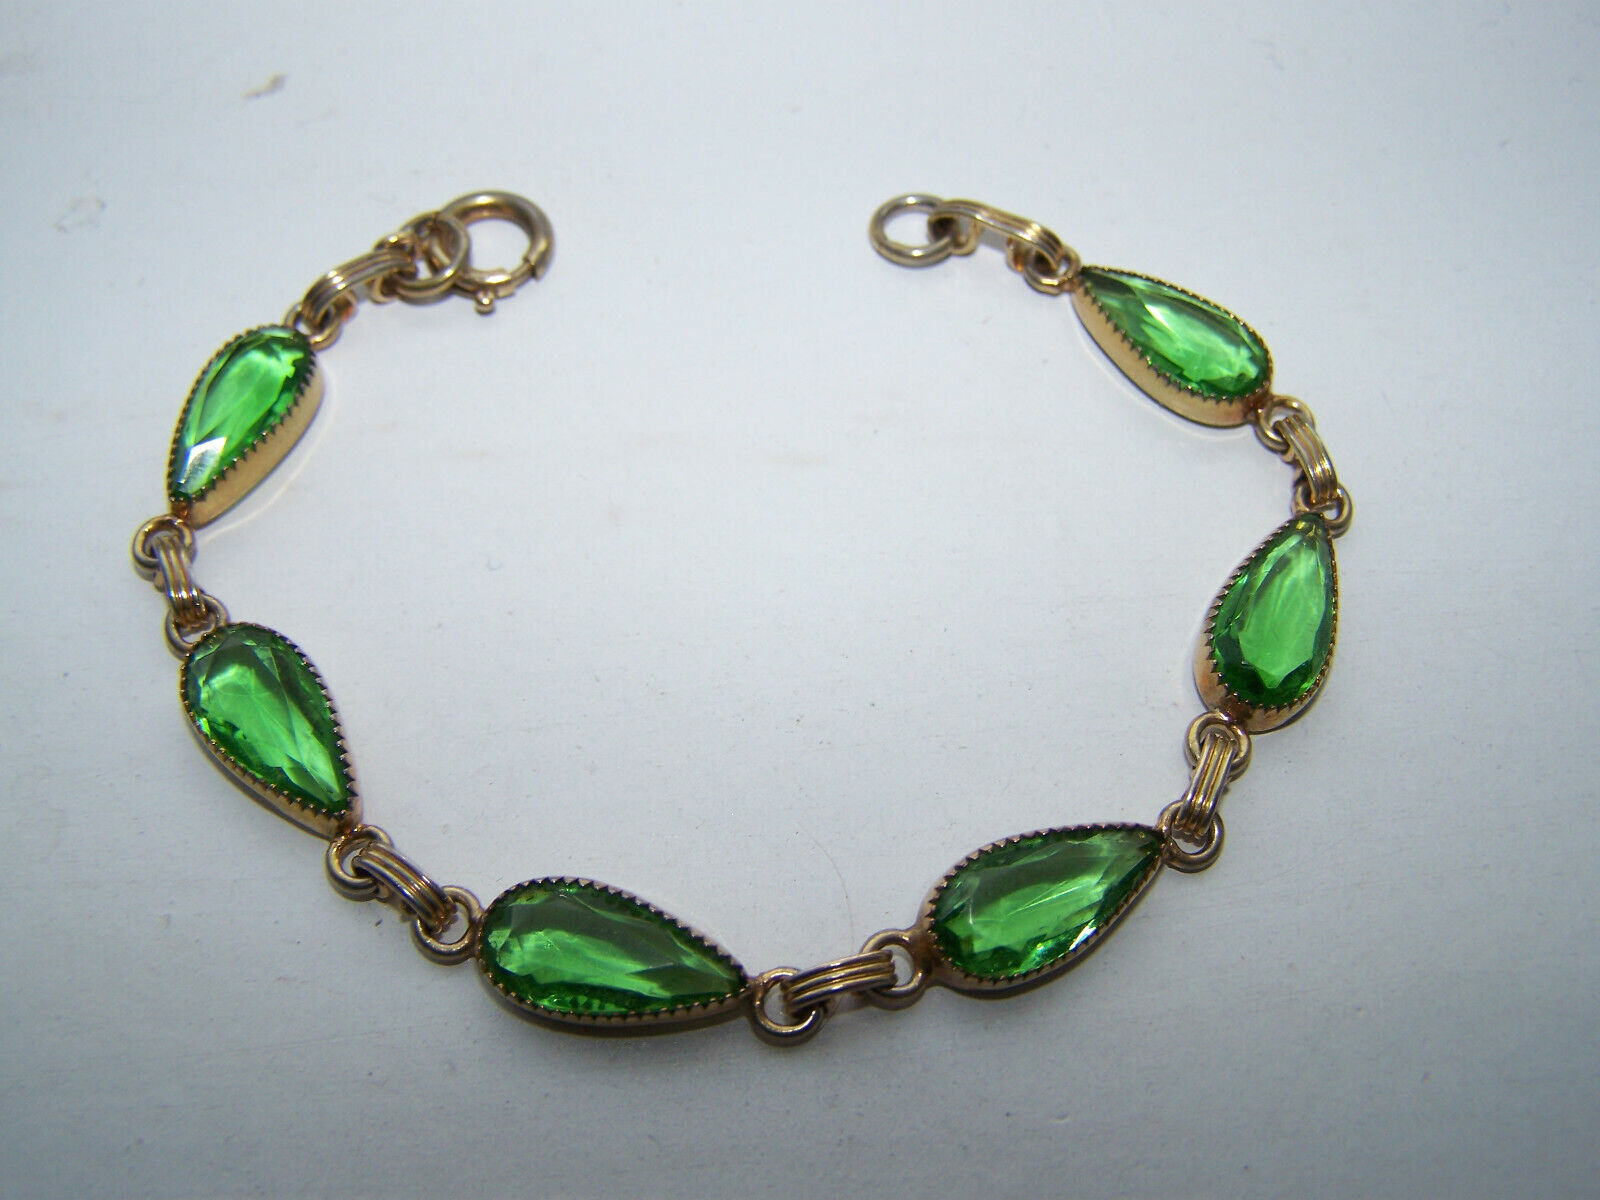 VIntae Delicate Green Crystal Glass Linked Bracelet - Lovely - D21